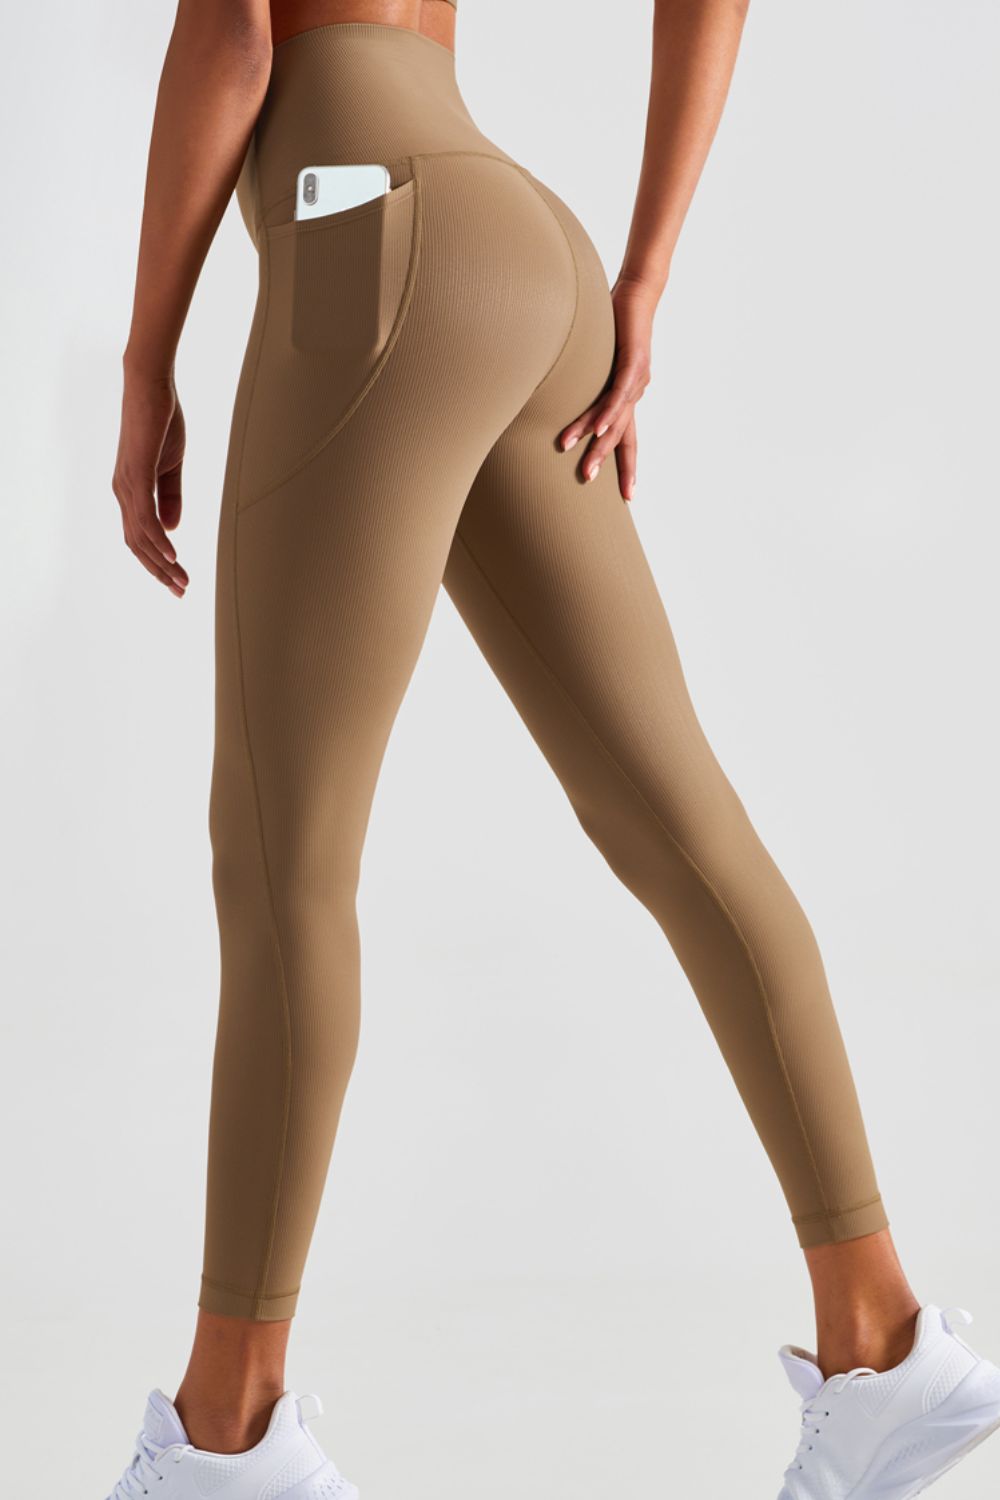 Soft and Breathable High-Waisted Yoga Leggings - BloomBliss.com